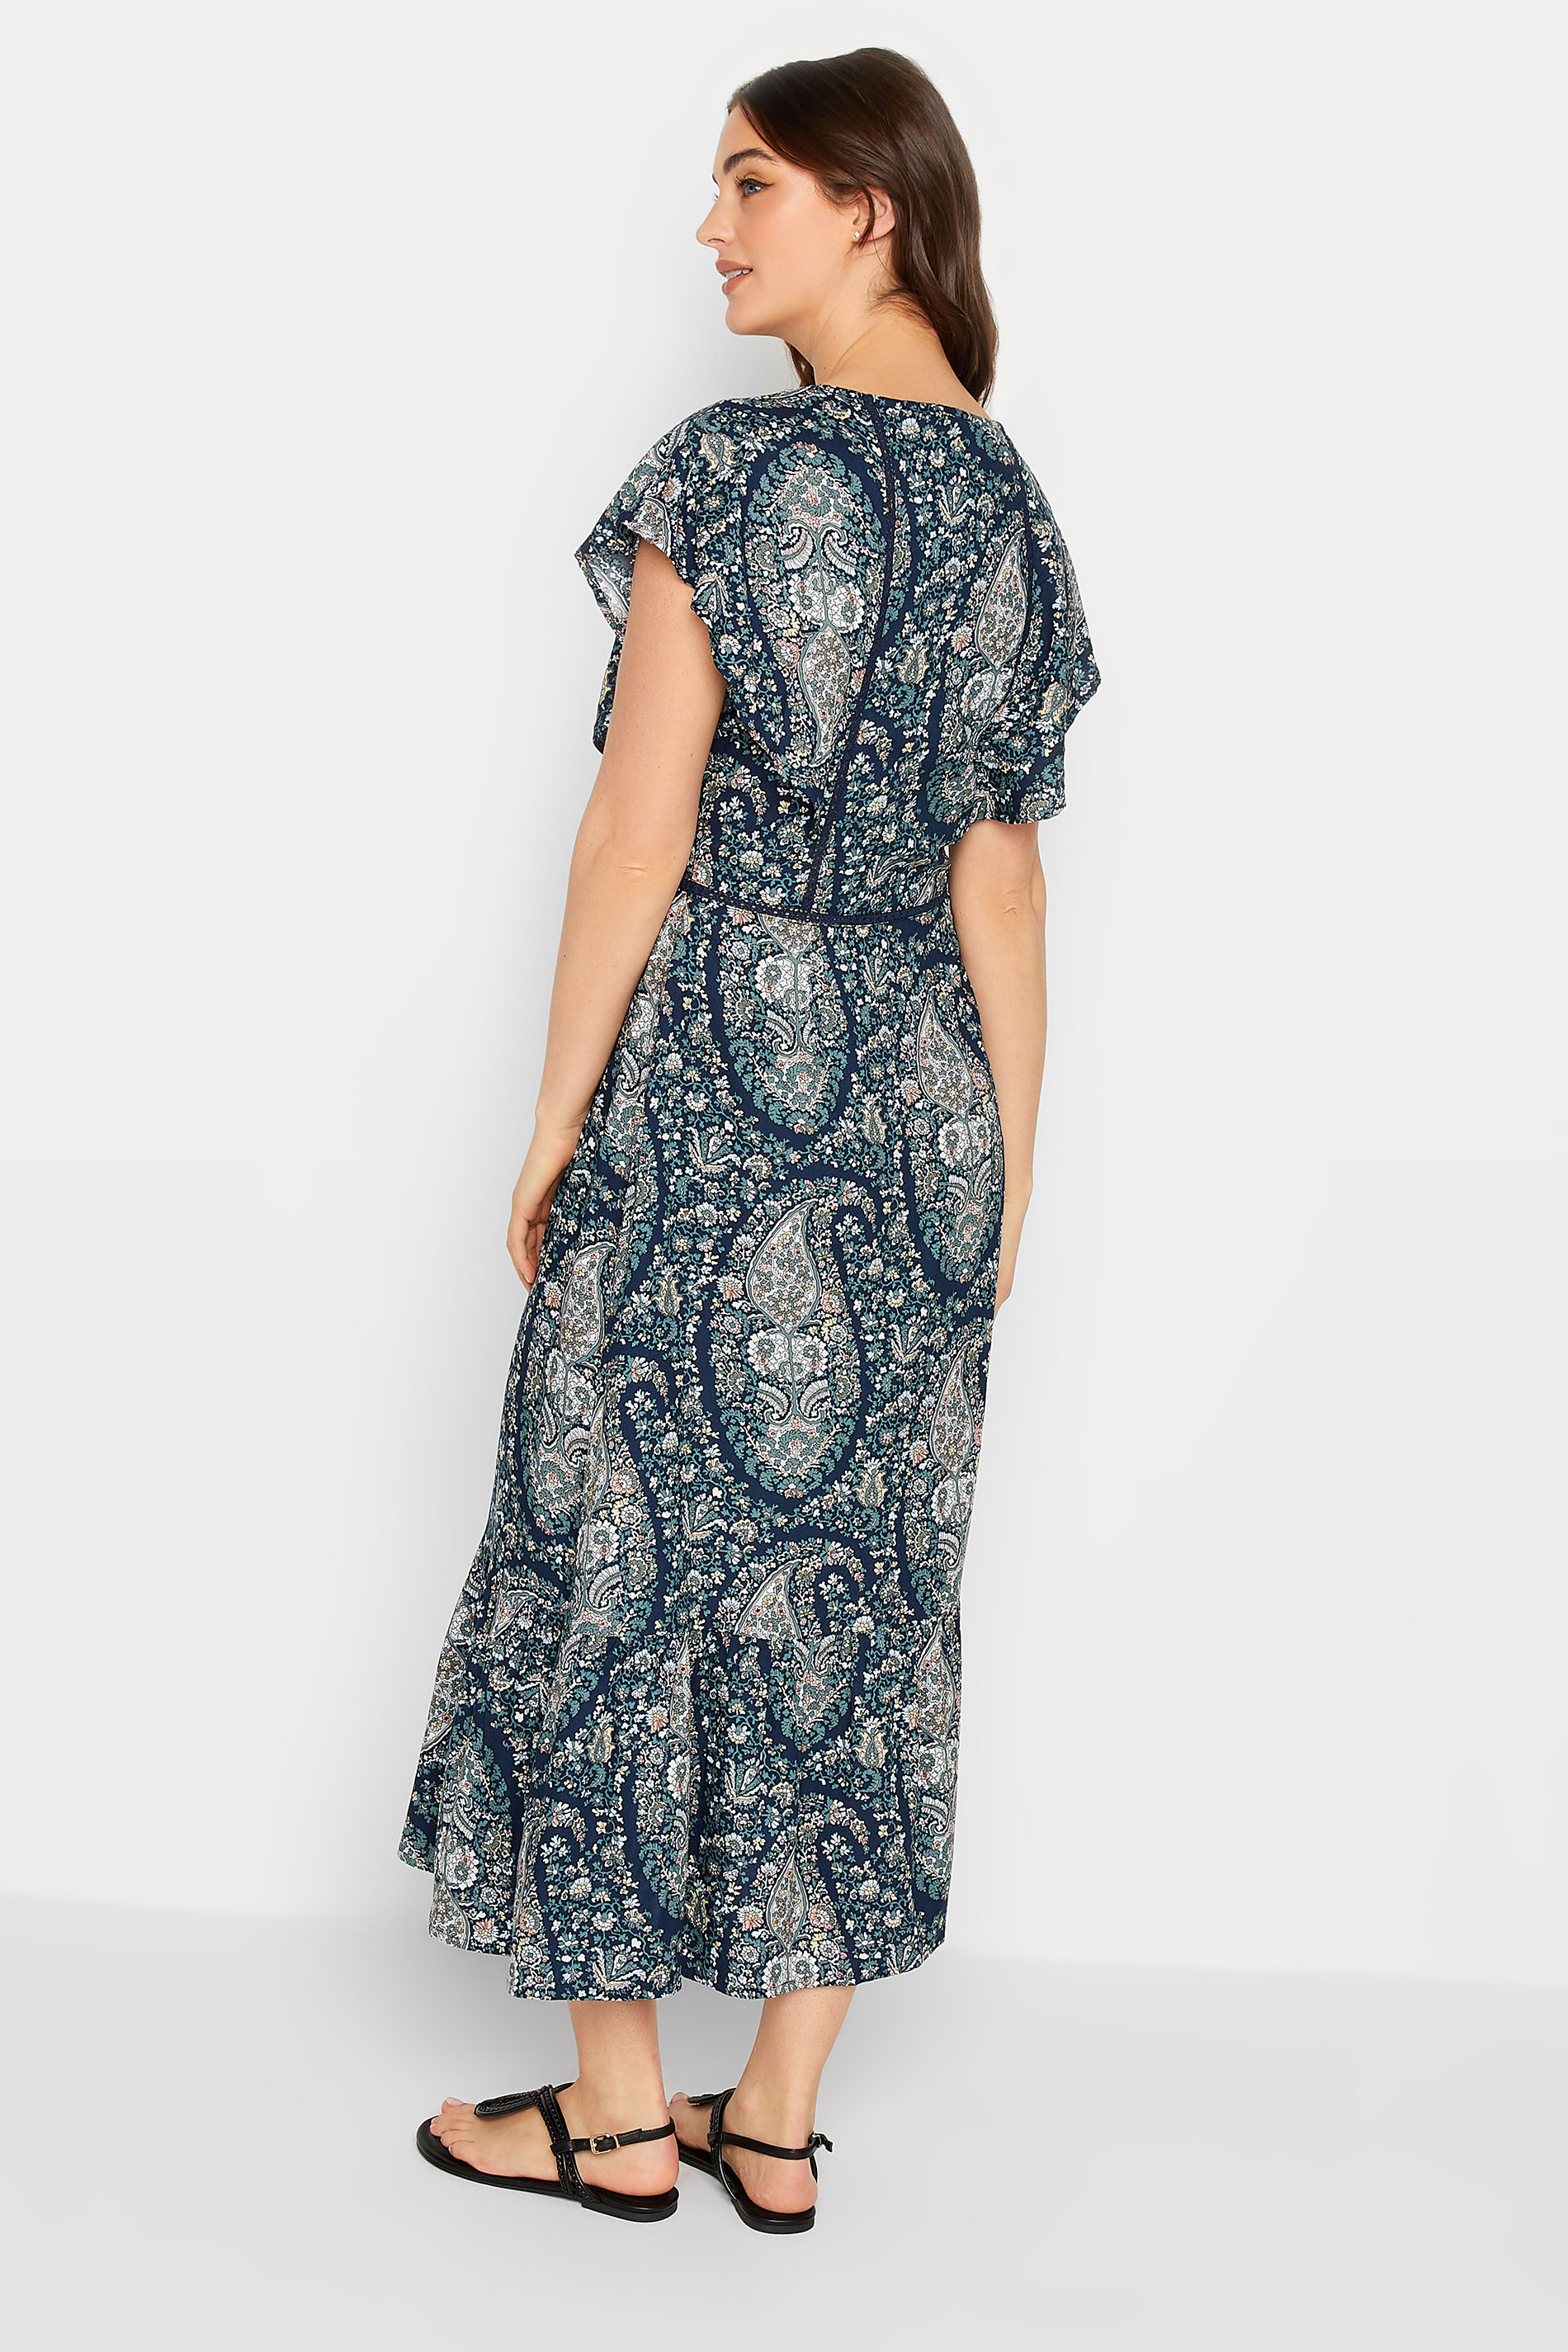 LTS Tall Women's Navy Blue Paisley Print Frill Sleeve Maxi Dress | Long Tall Sally 3